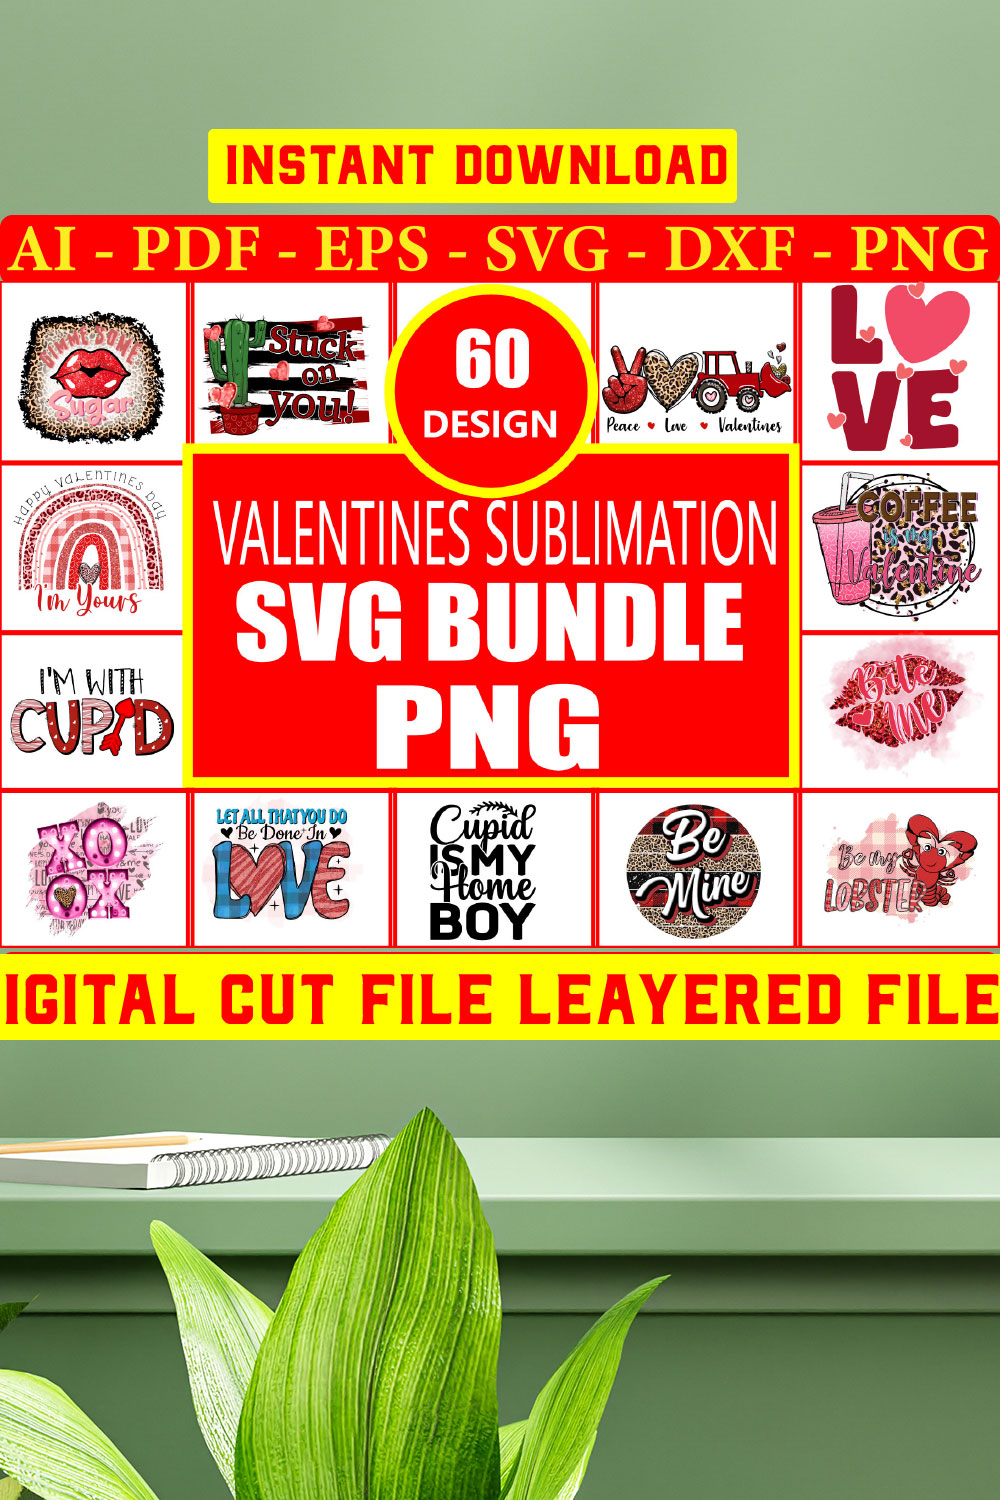 Valentines Sublimation Svg Bundles Vol-11 pinterest preview image.